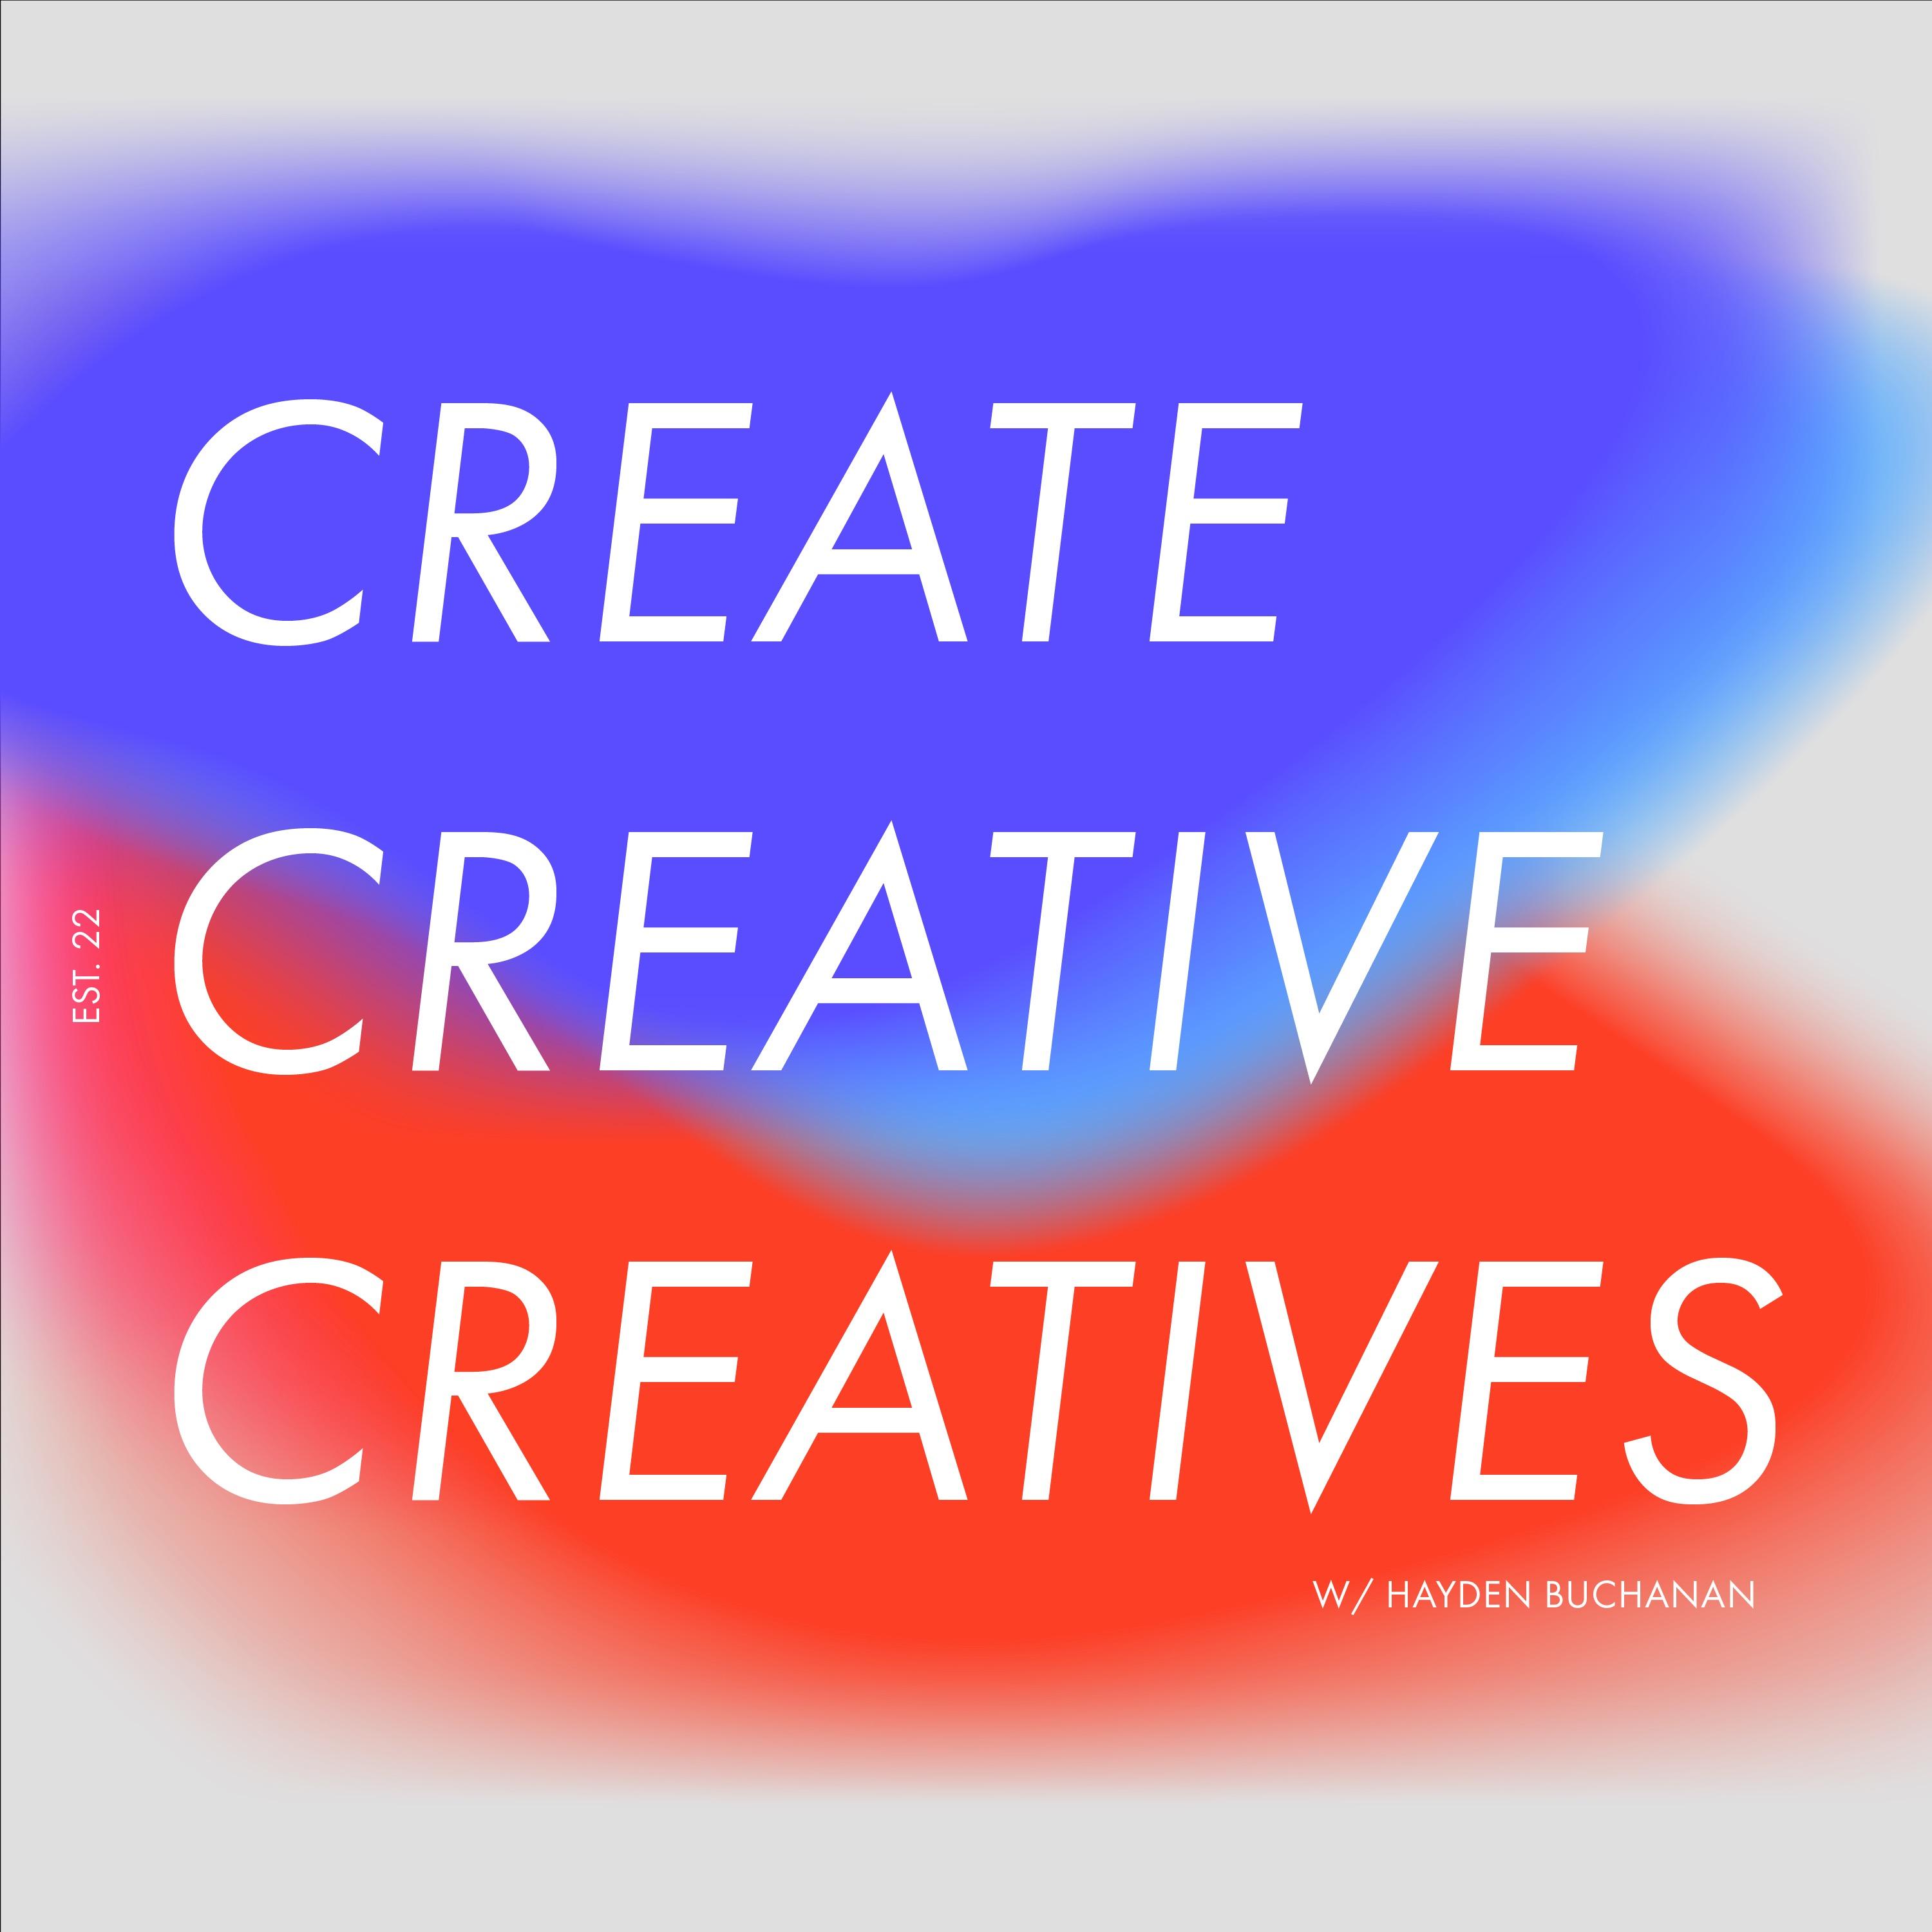 Create Creative Creatives